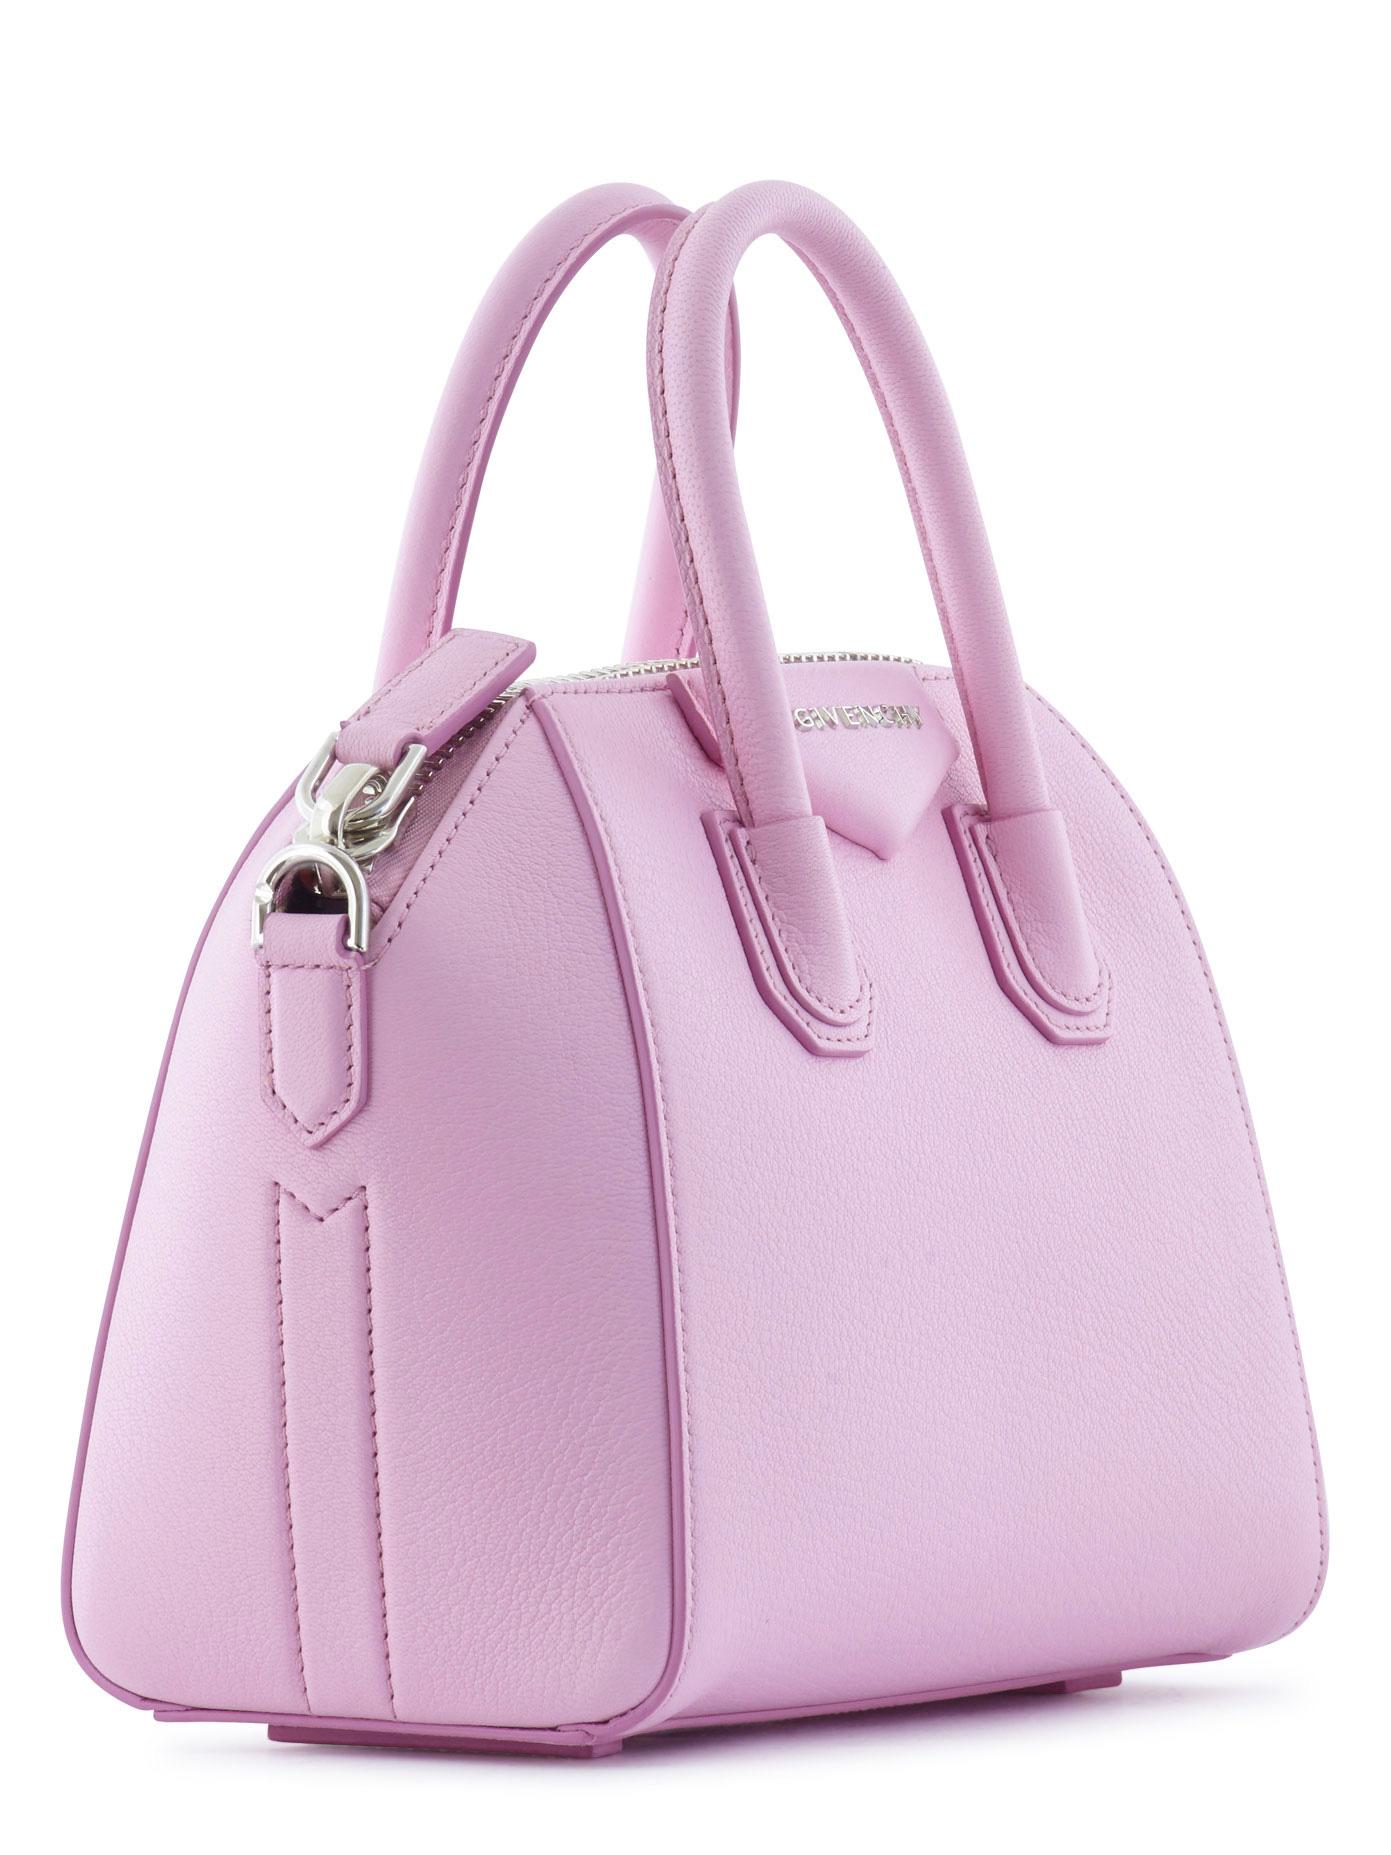 Givenchy Antigona Mini Leather Bag in Pink - Lyst